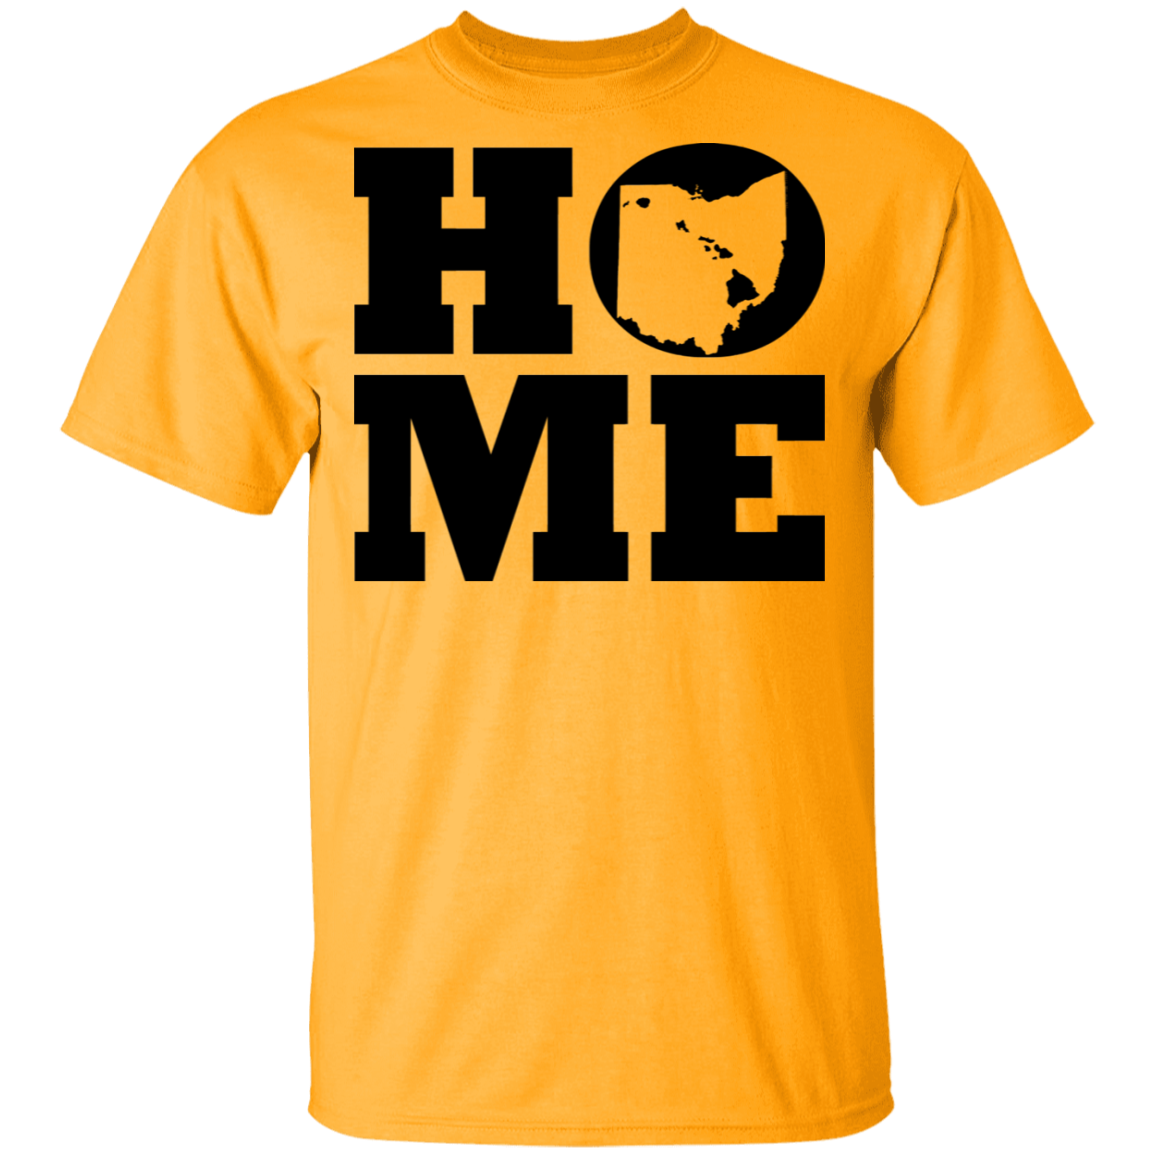 Home Roots Hawai'i and Ohio T-Shirt